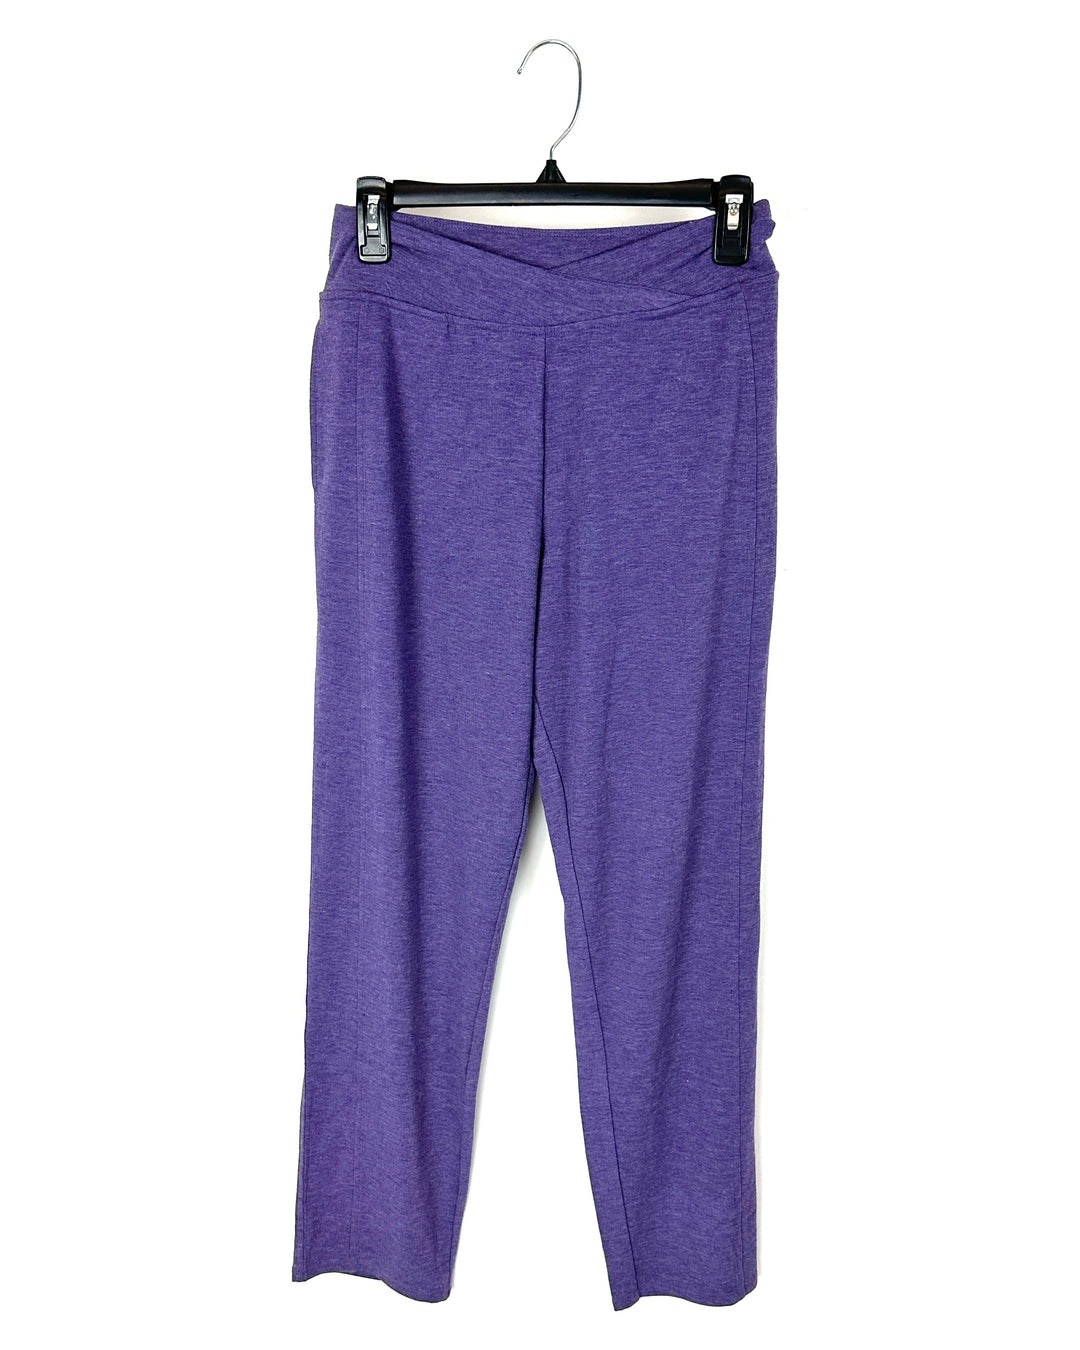 Purple Pants - Small